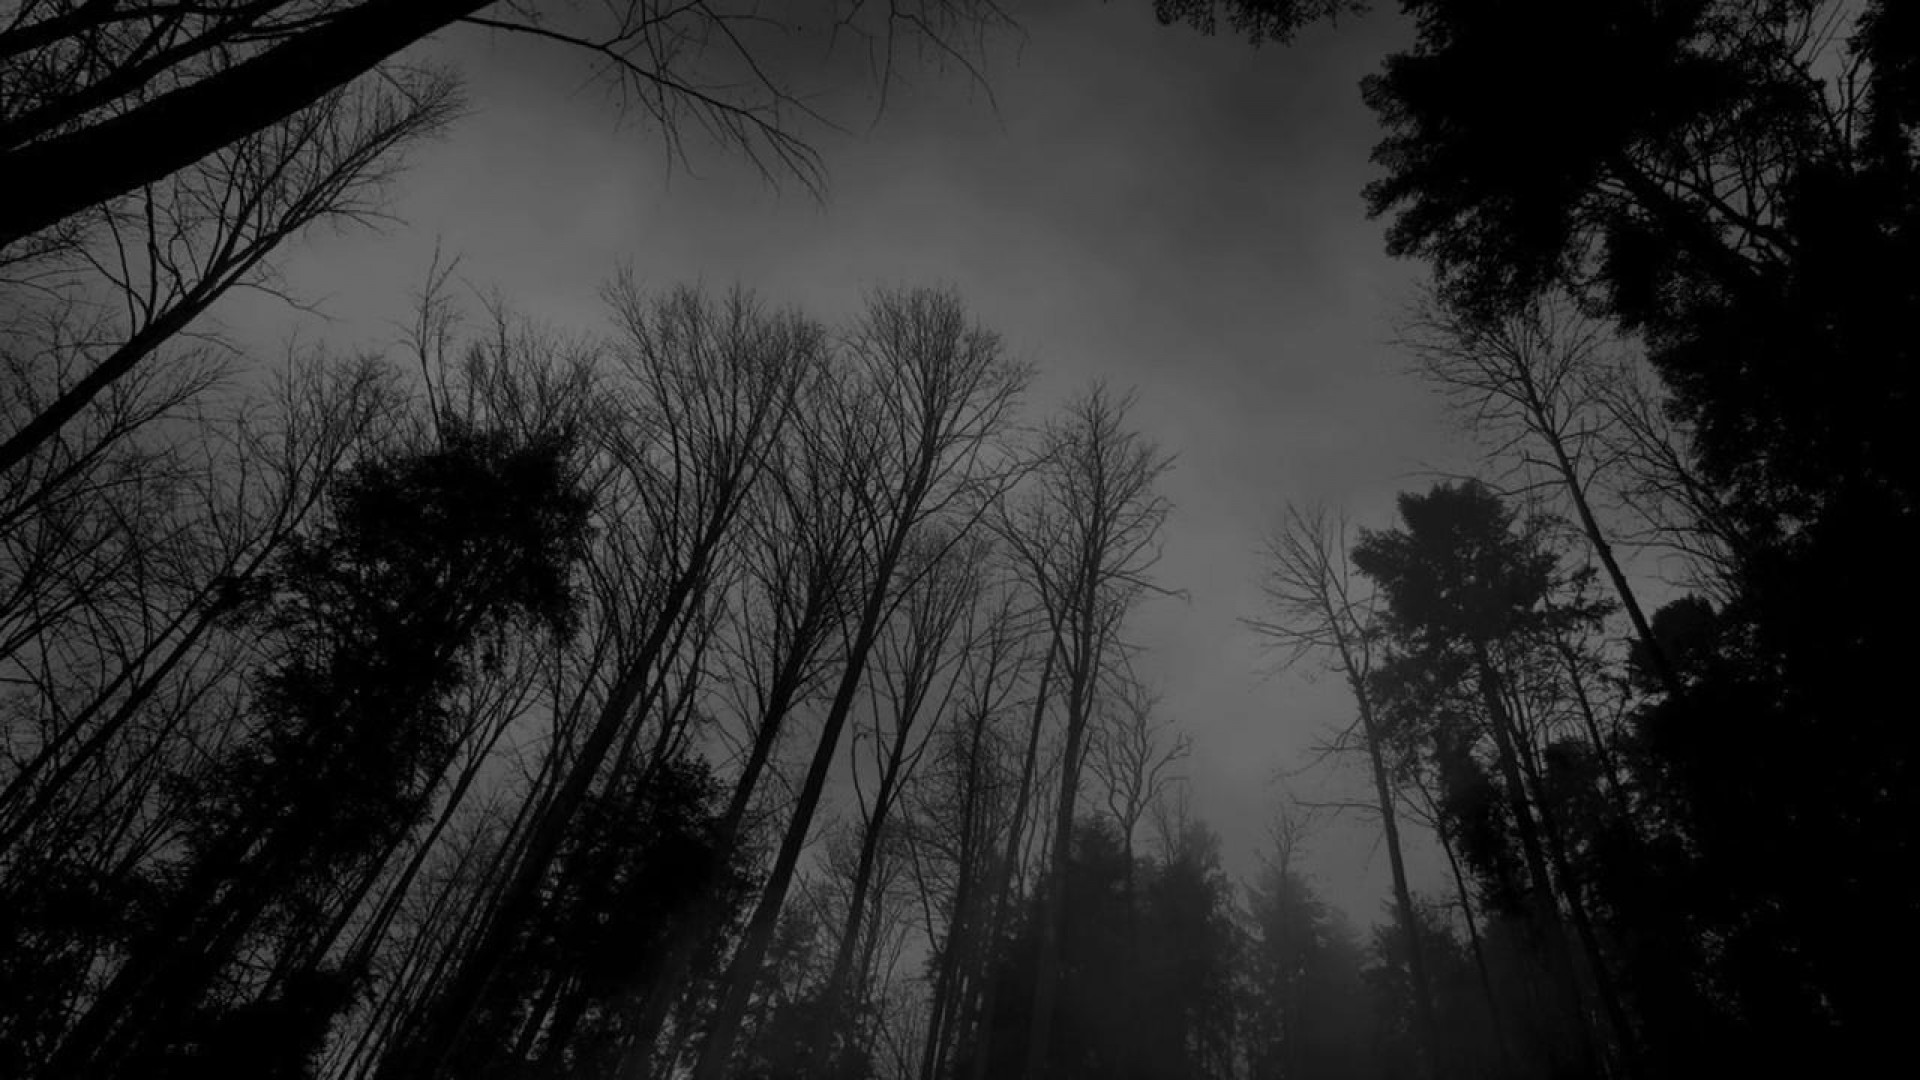 tumblr blogs backgrounds quality for white  wallpaper.jpg black forest Image  dark Forest